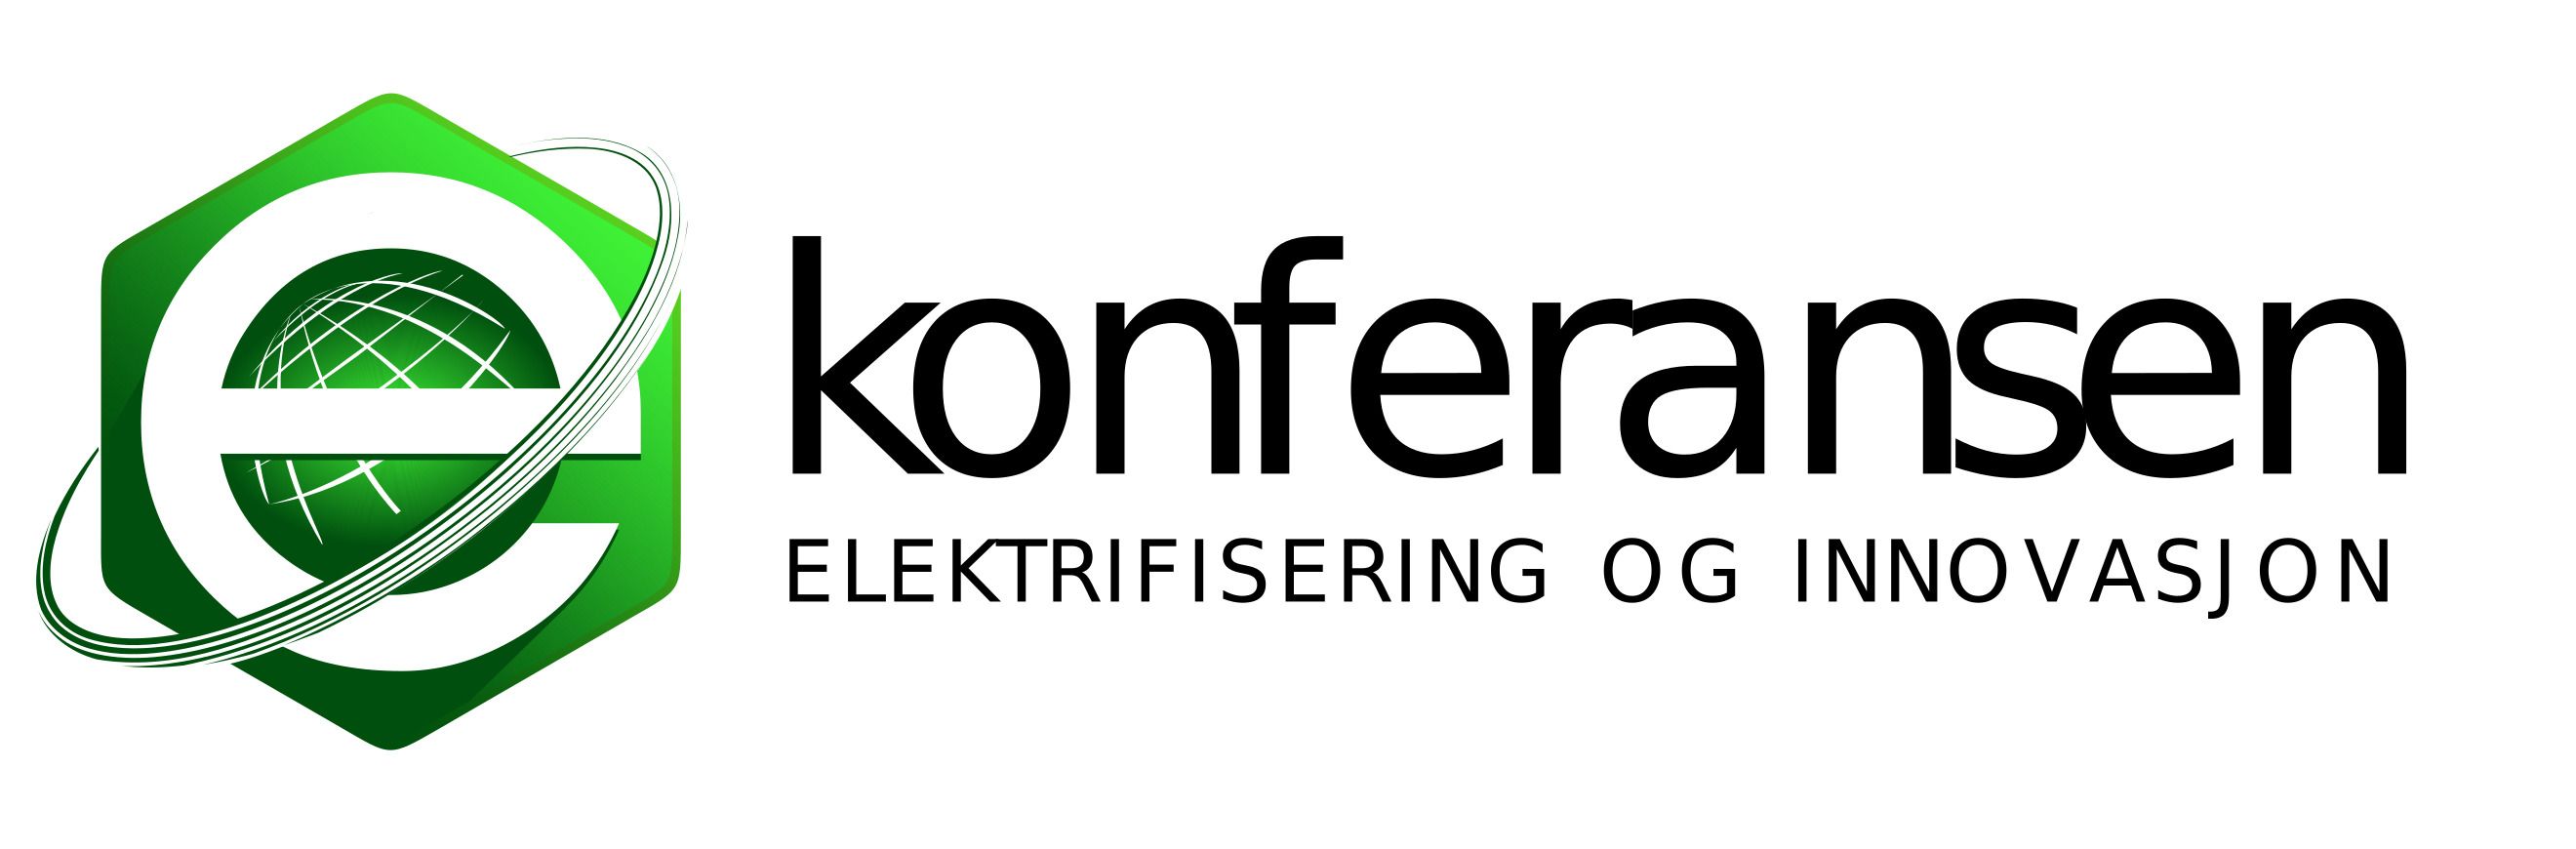 E_konferansen_logo_left_font.jpg